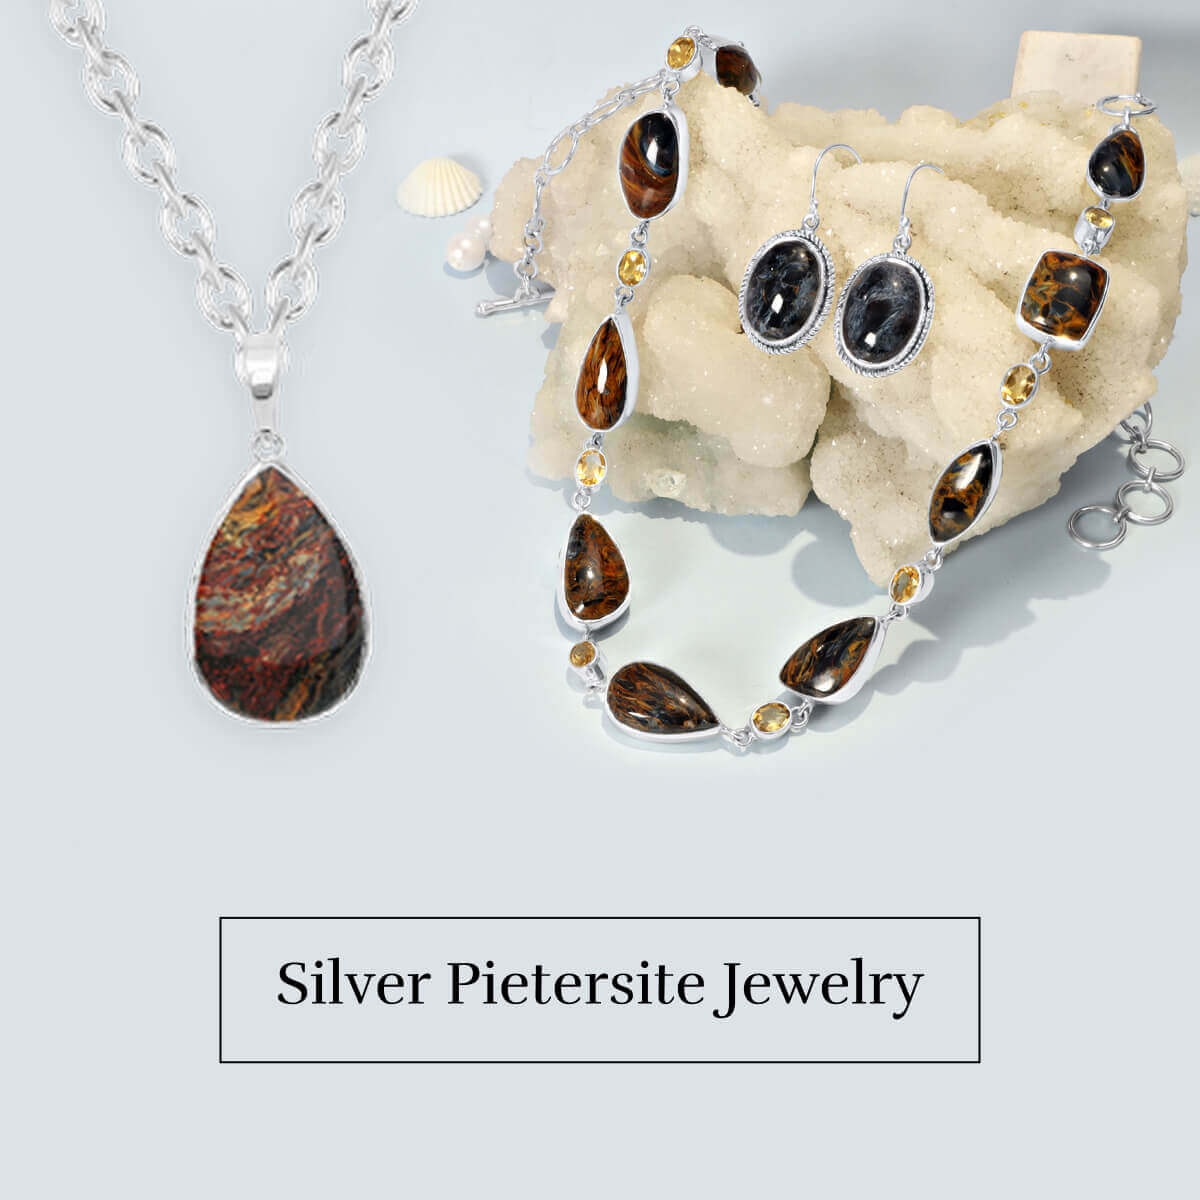 Pietersite Jewelry